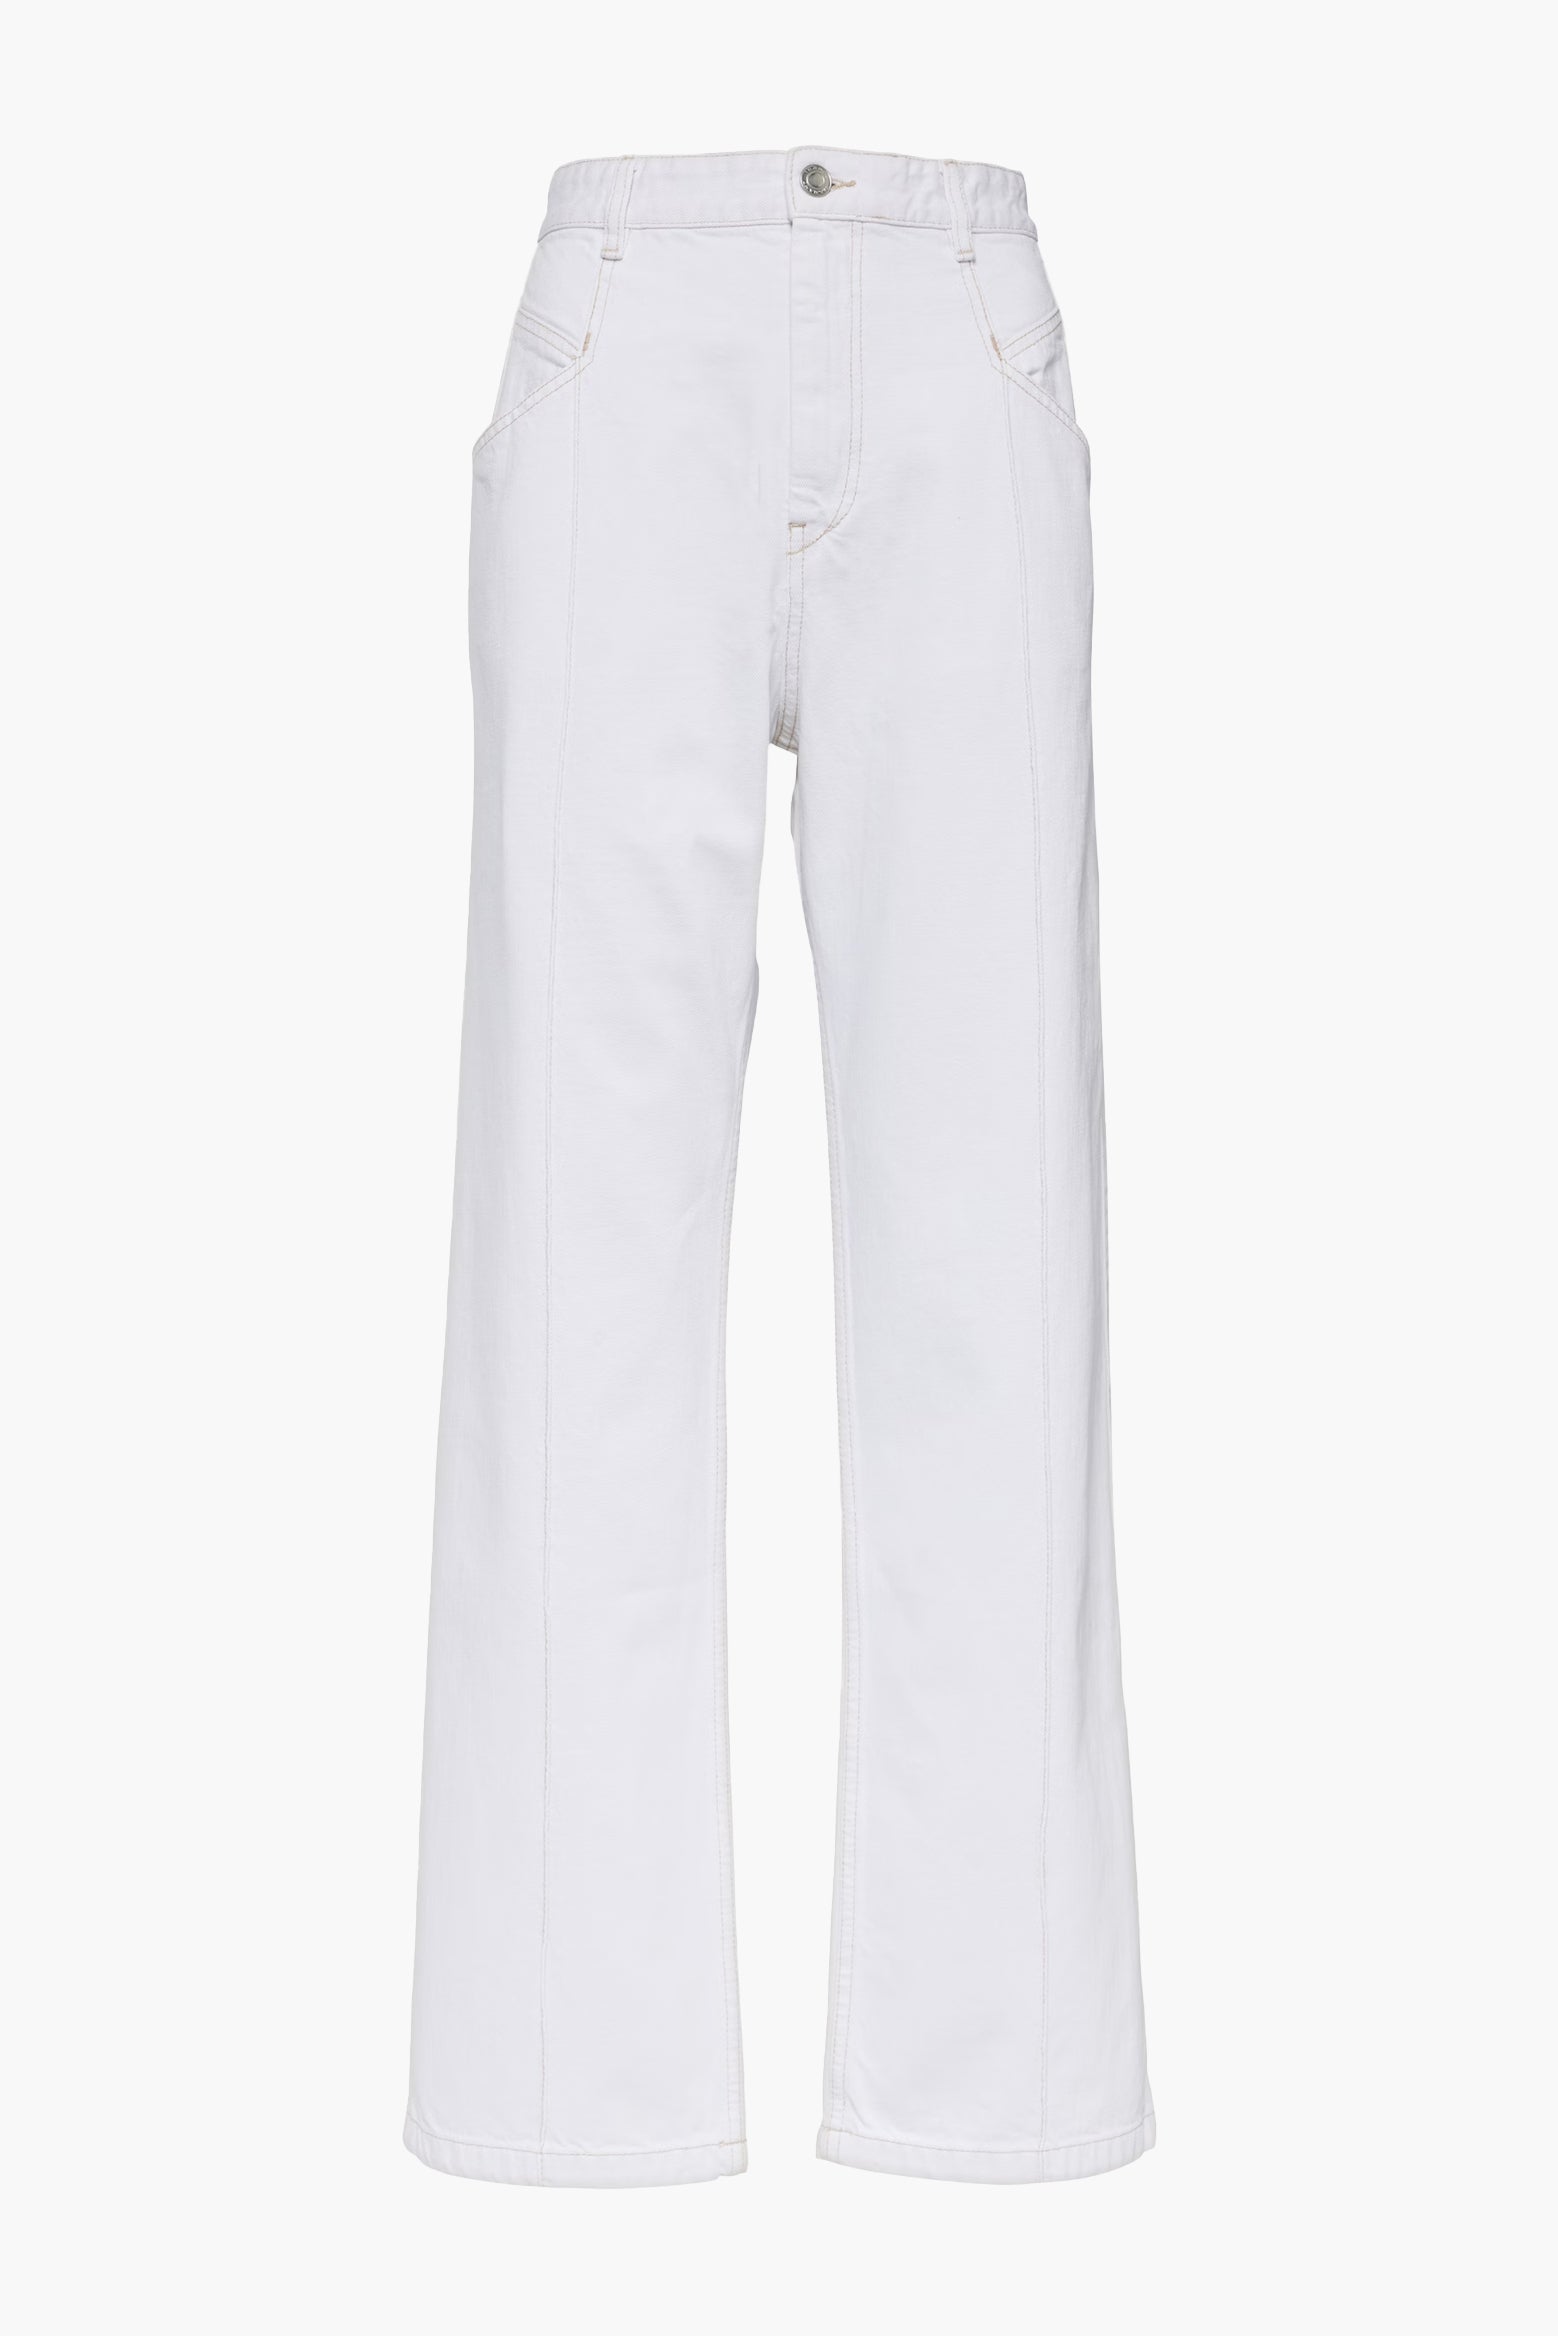 ISABEL MARANT Nadege Jeans in White | The New Trend Australia